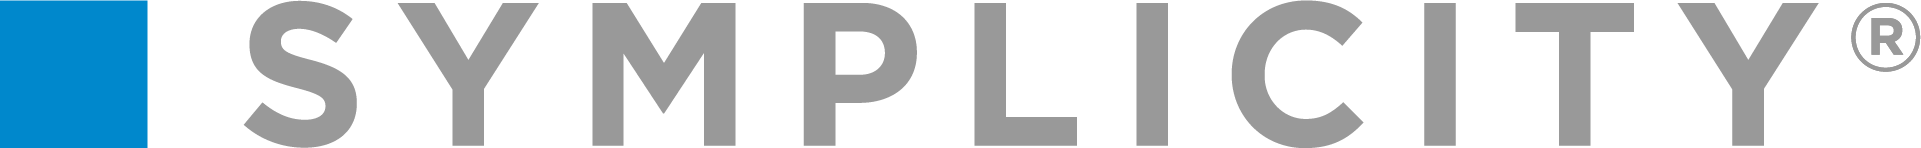 logo_digital_symplicity_reg_color-1